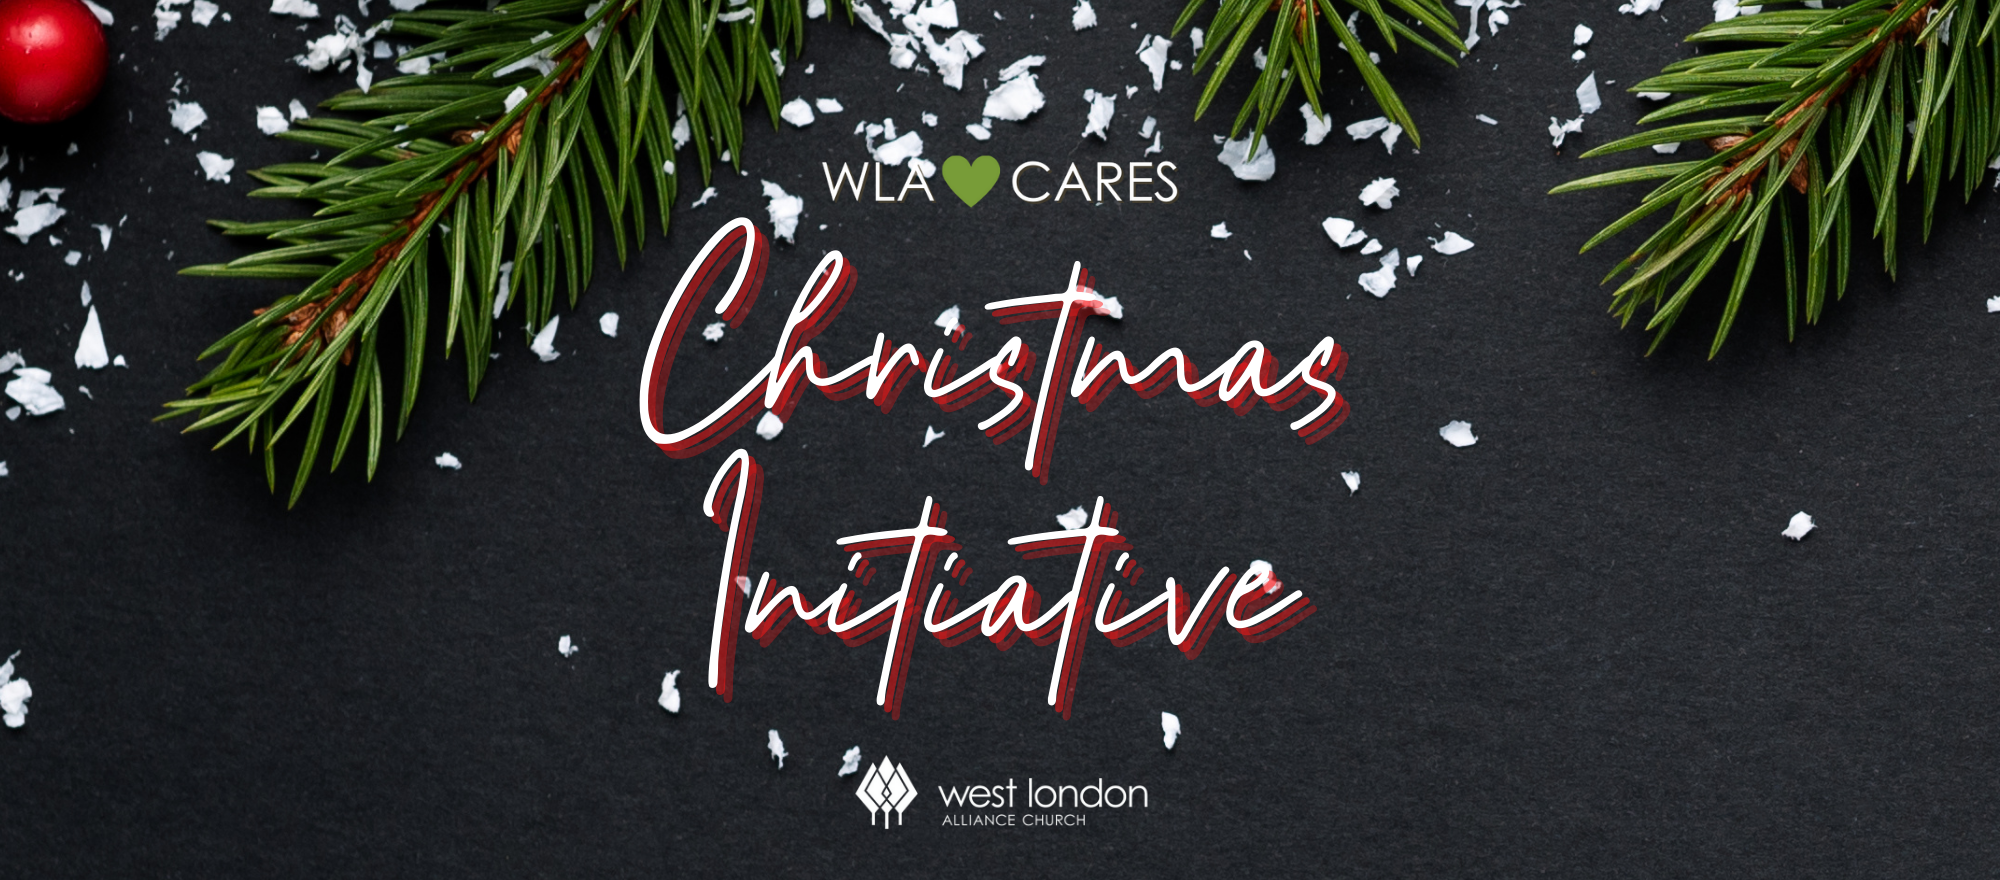 WLA Cares Christmas Initiative Image